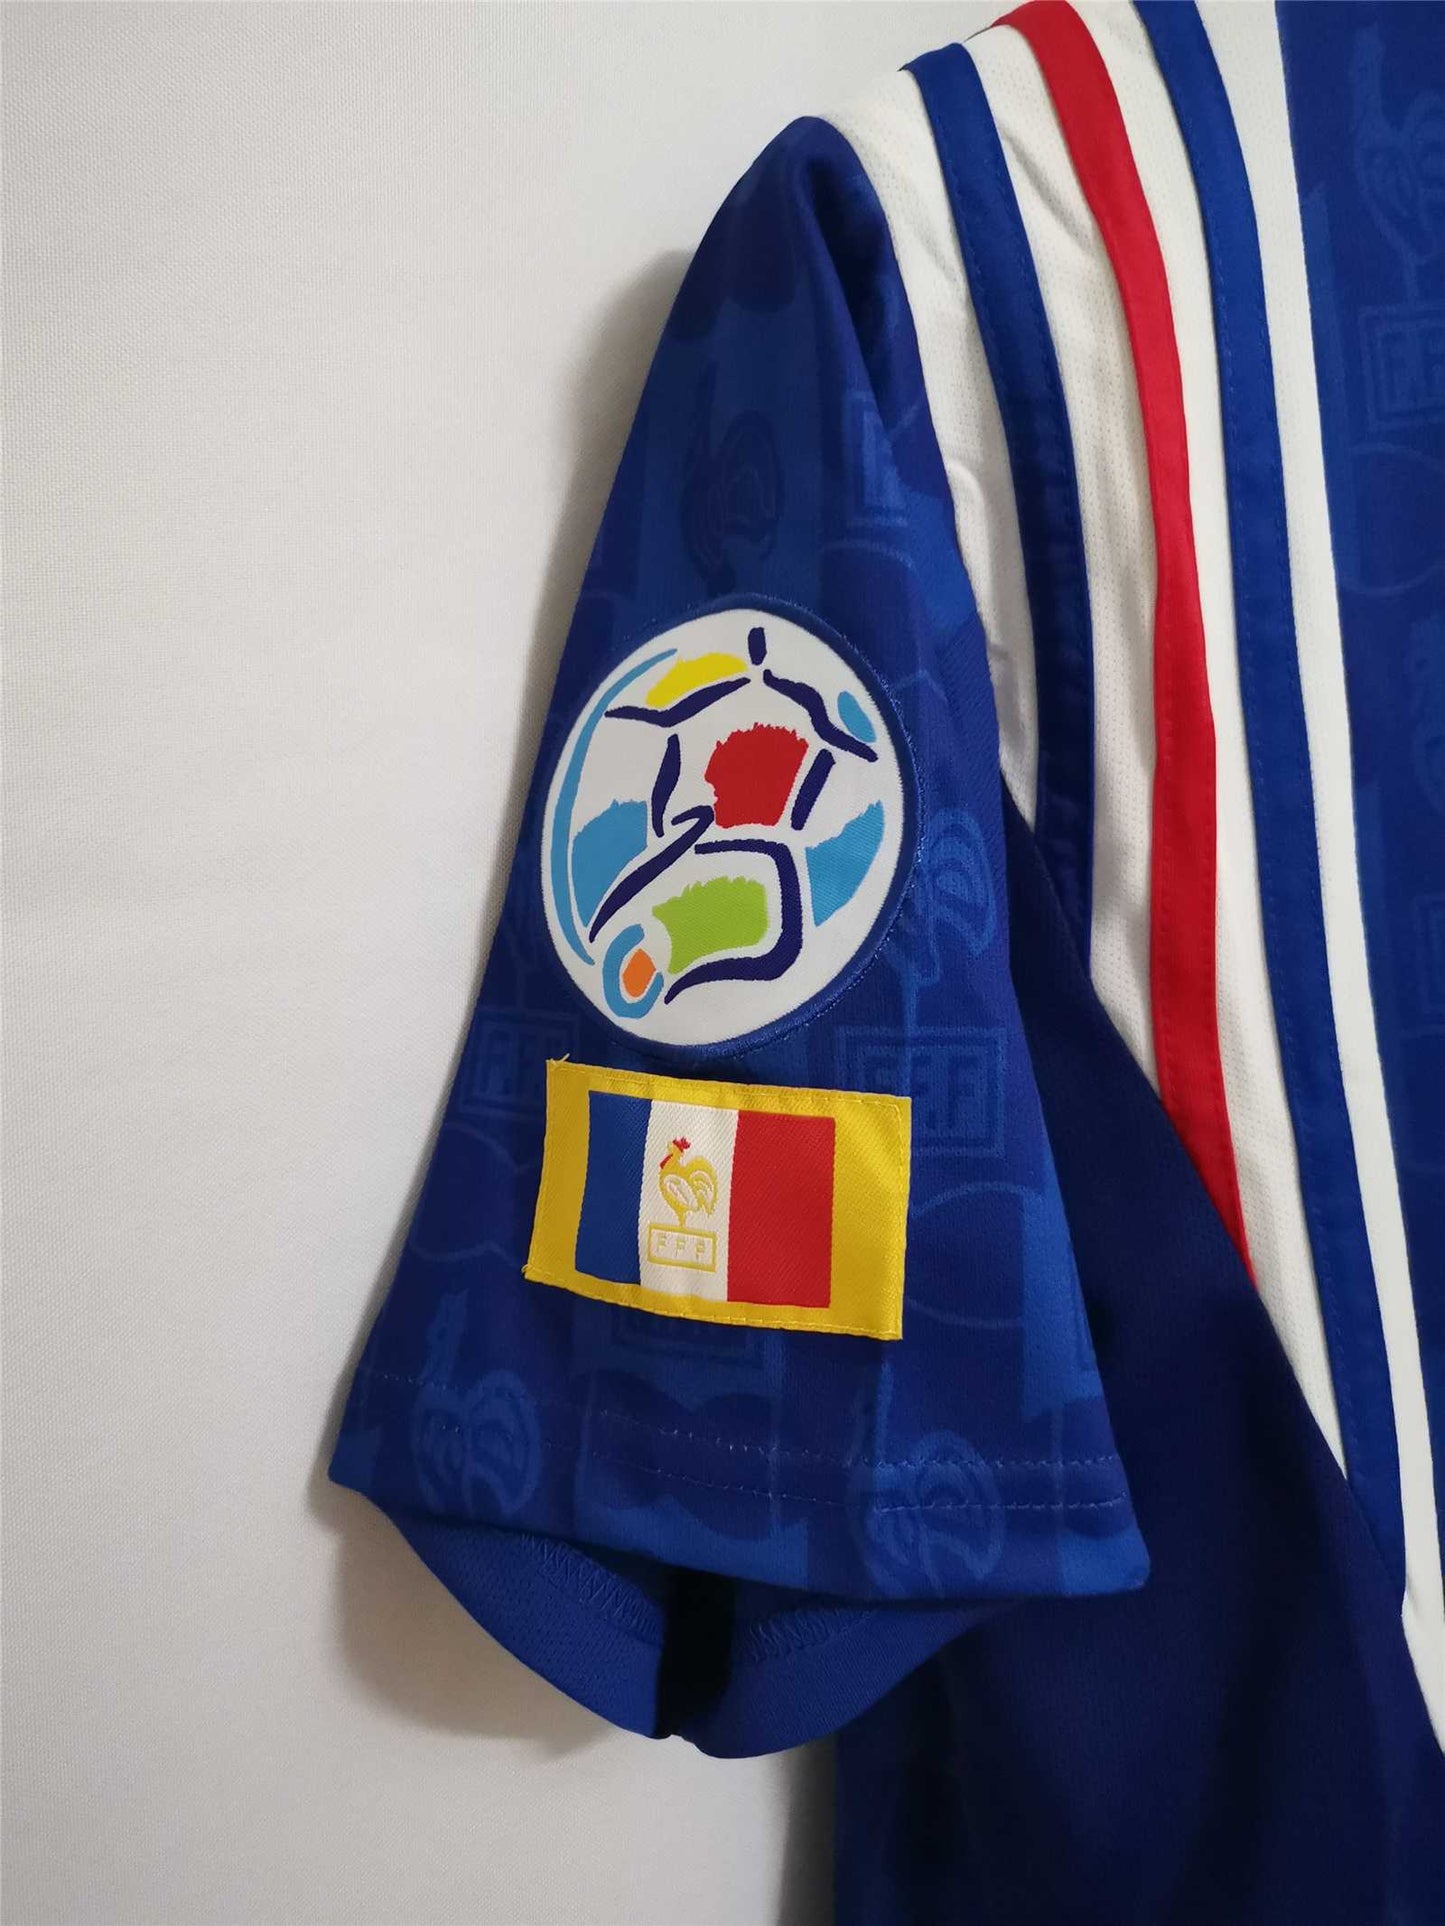 France 1996 Home Shirt